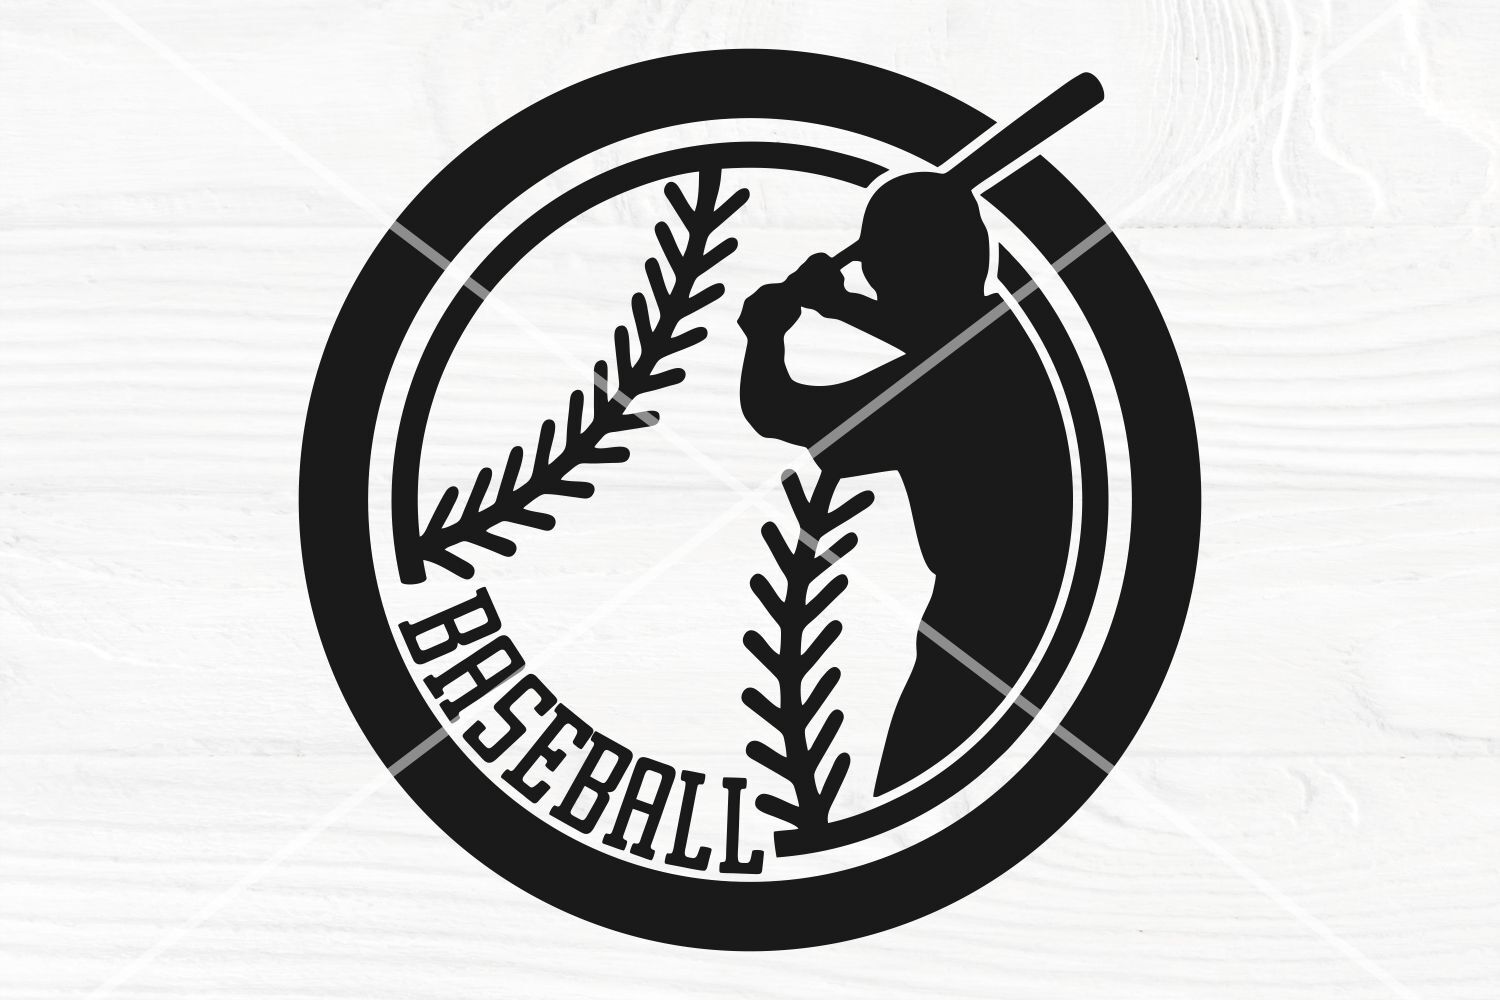 Baseball SVG Bundle, Baseball Shirt, SVG Designs By TonisArtStudio |  TheHungryJPEG